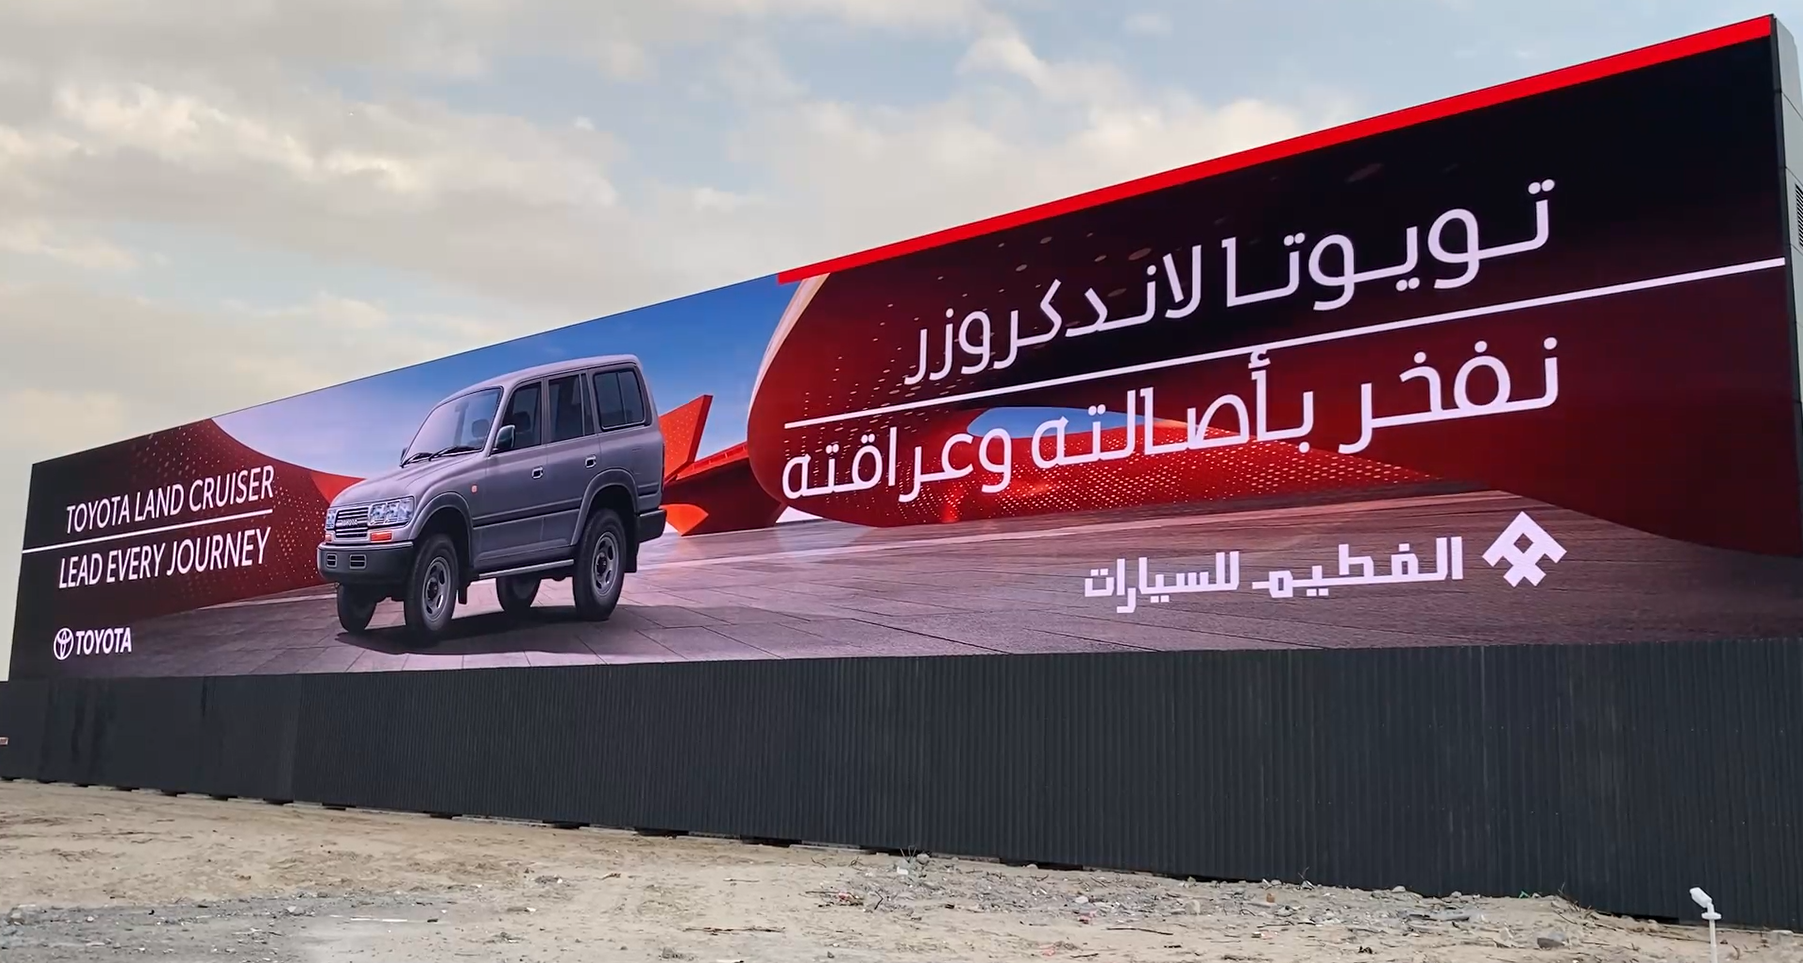 Advertising Billboard in Dubai UAE